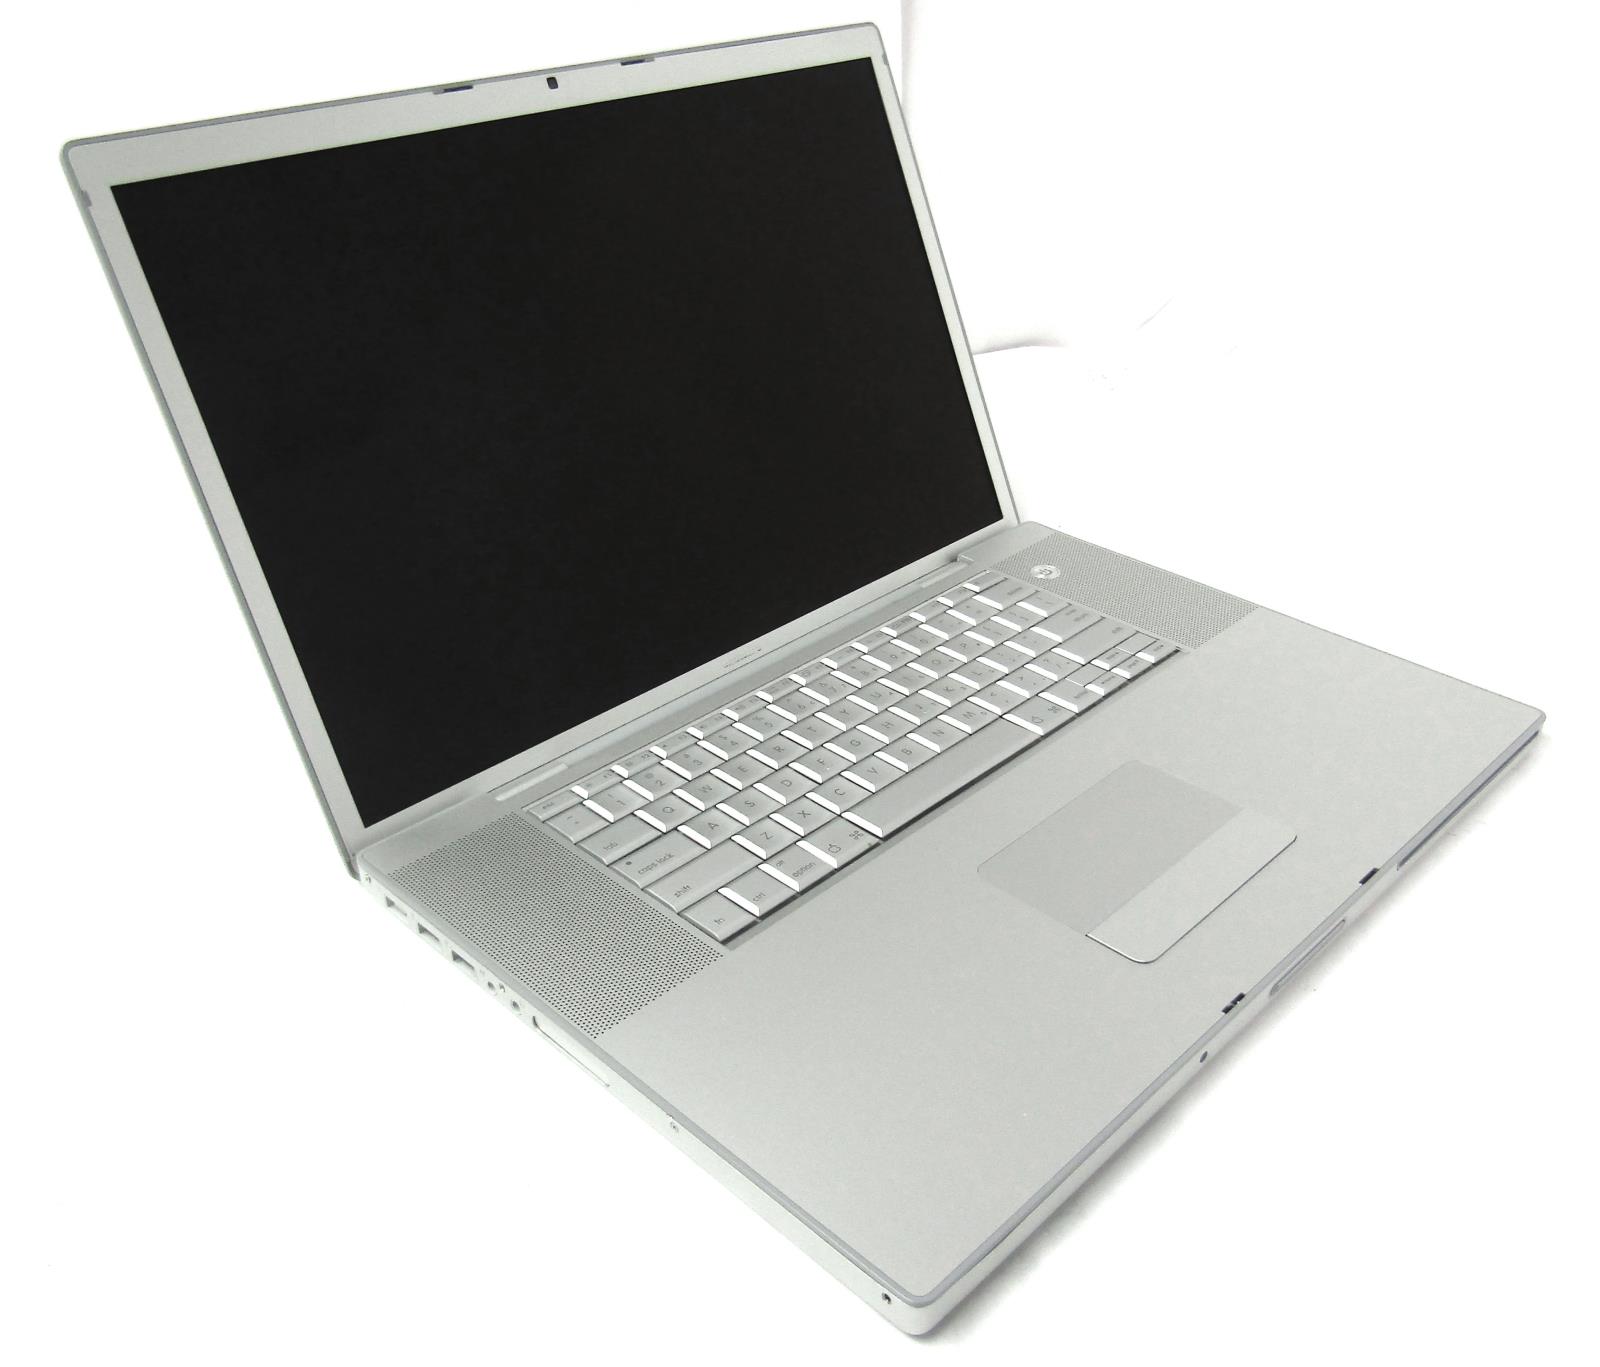 2006 macbook pro screen size